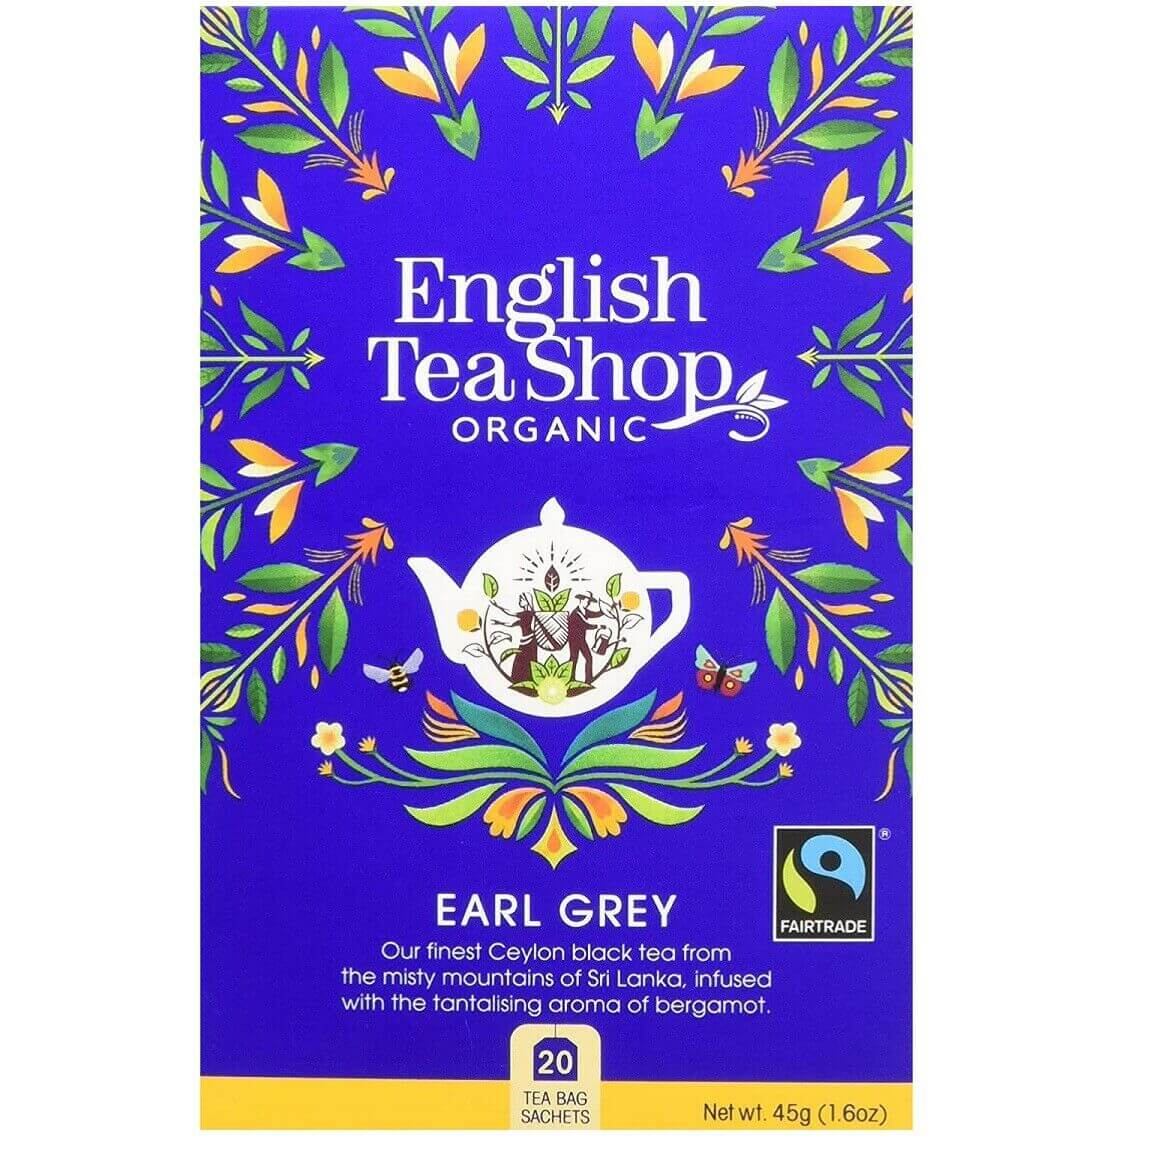 English Tea Shop Organic Fairtrade Earl Grey Jarrold Norwich